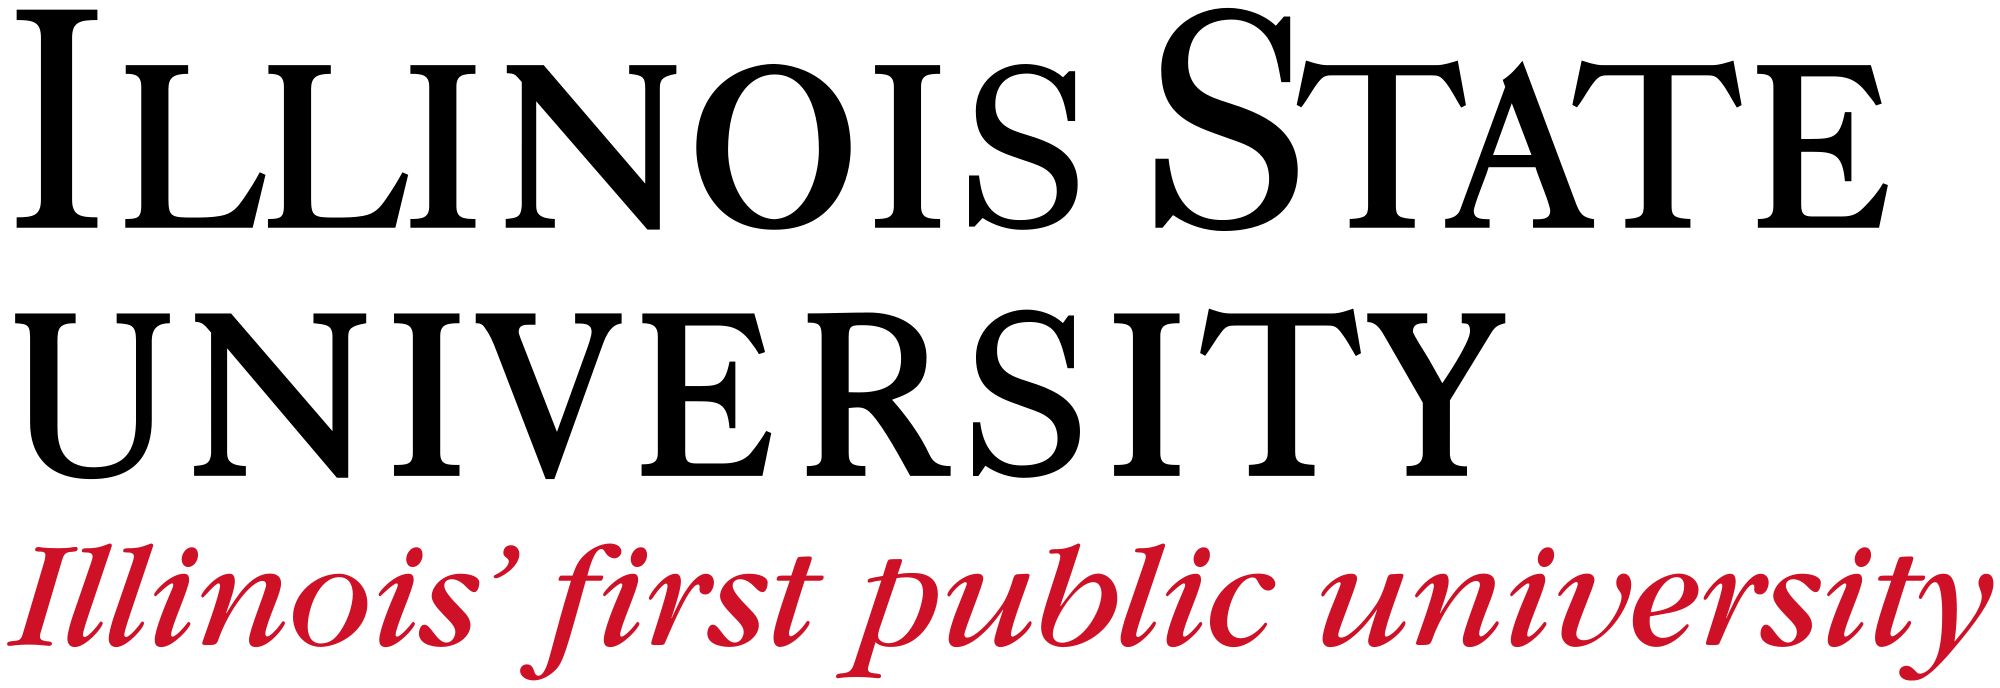 Illinois State University Logo - File:Illinois State University logo.svg - Wikimedia Commons